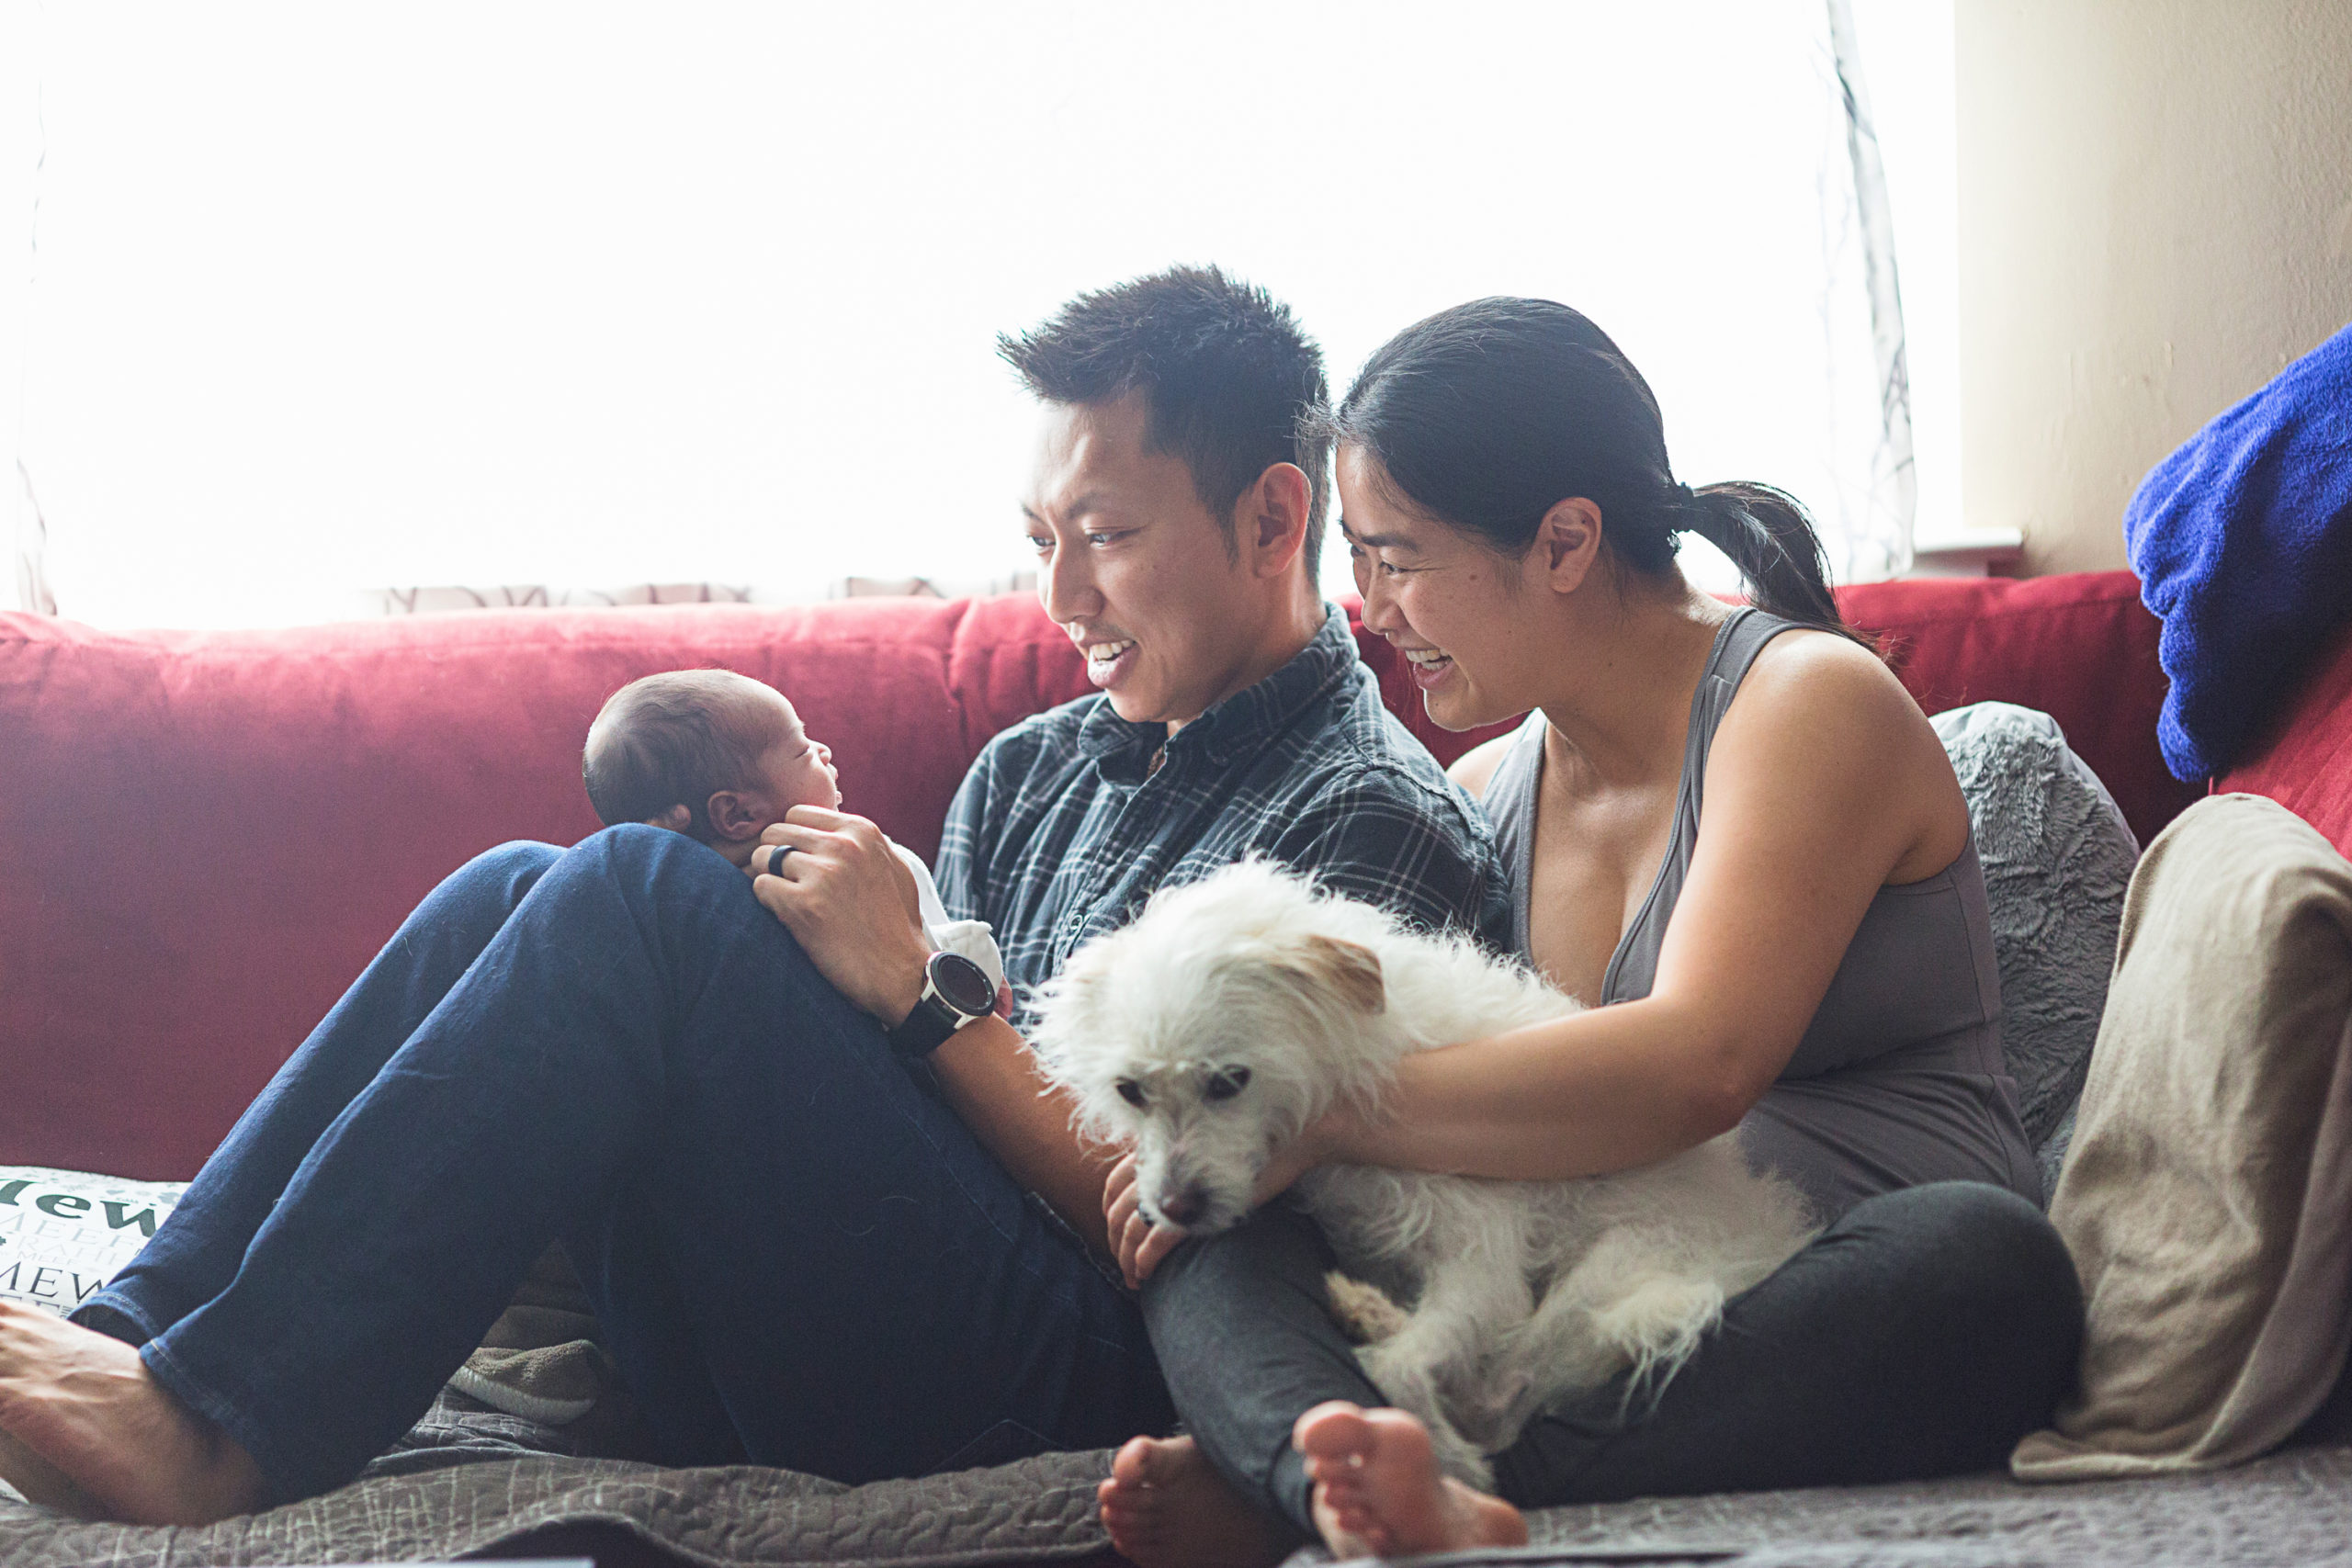 san jose photographer - lifestyle - family - fun - bay area - photography - family of three - newborn - dog